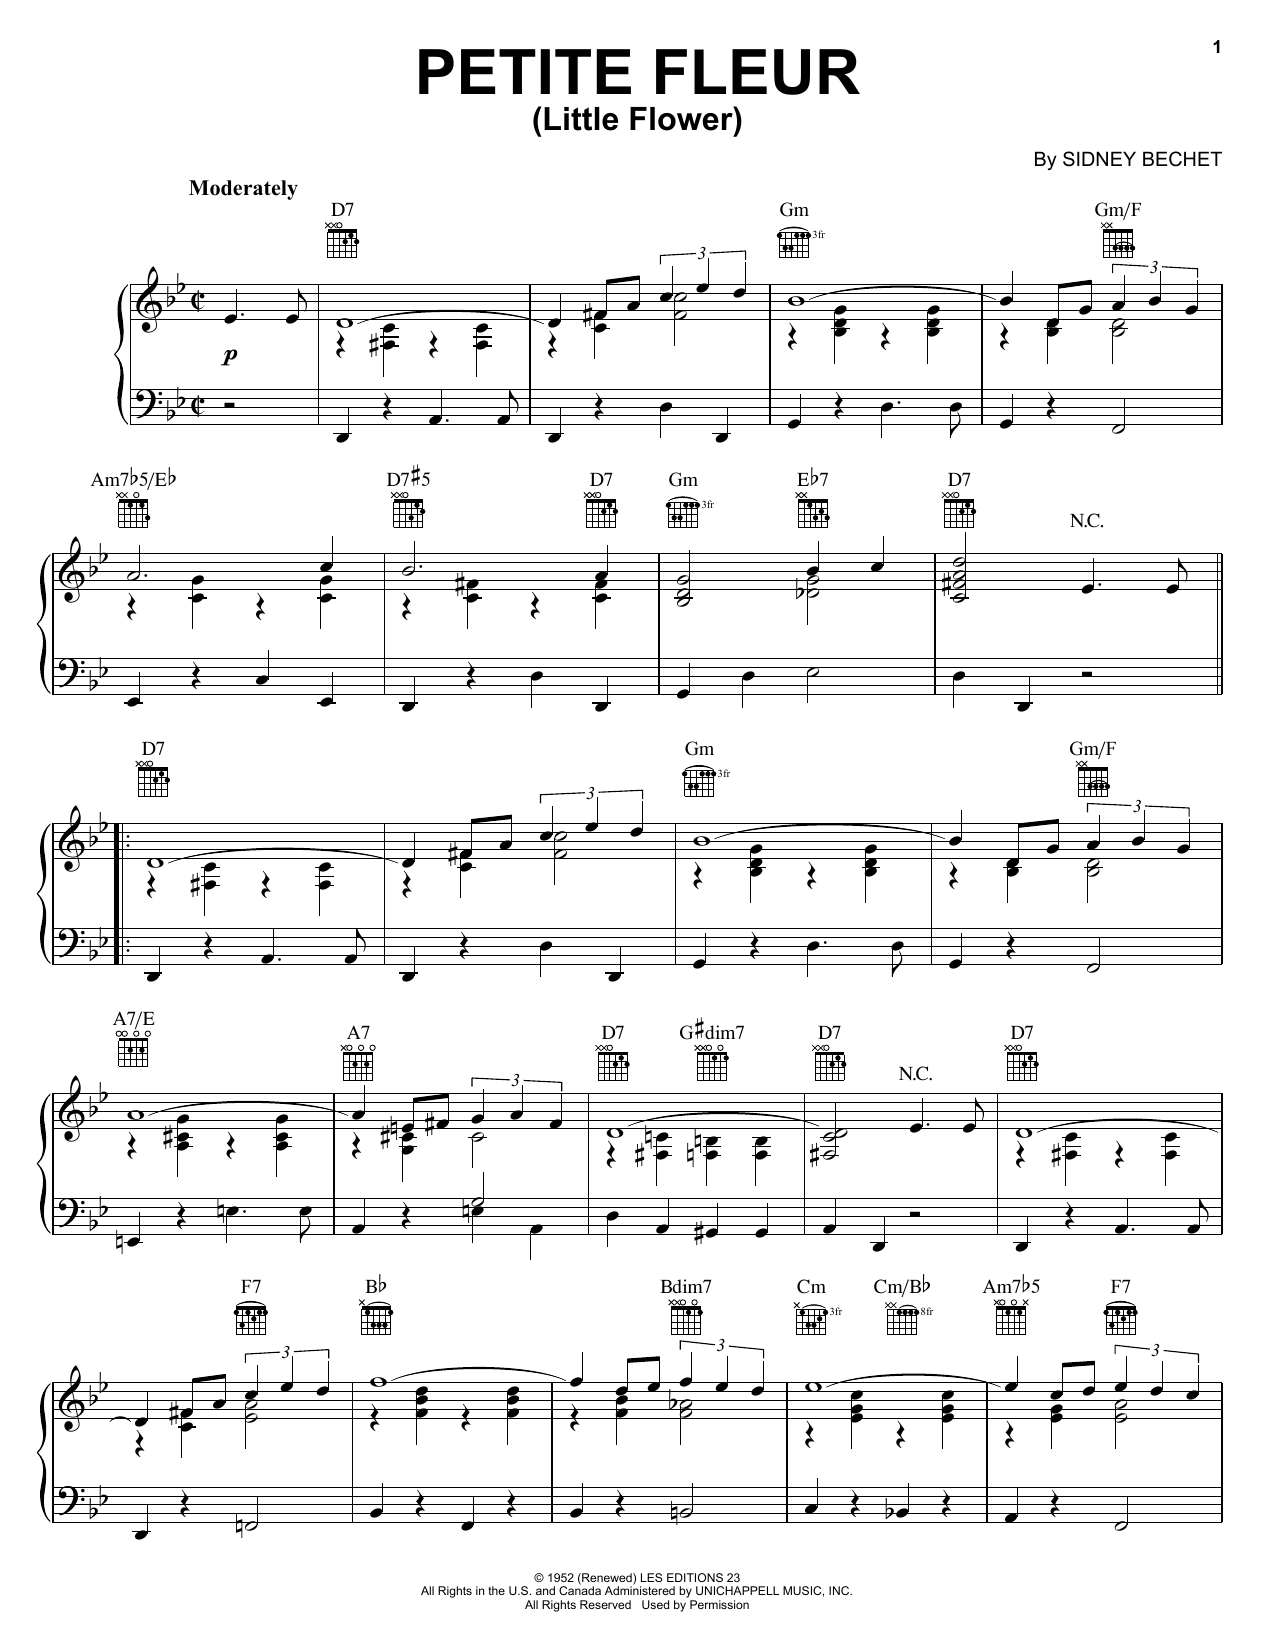 Sidney Bechet Petite Fleur (Little Flower) Sheet Music Notes & Chords for Guitar - Download or Print PDF